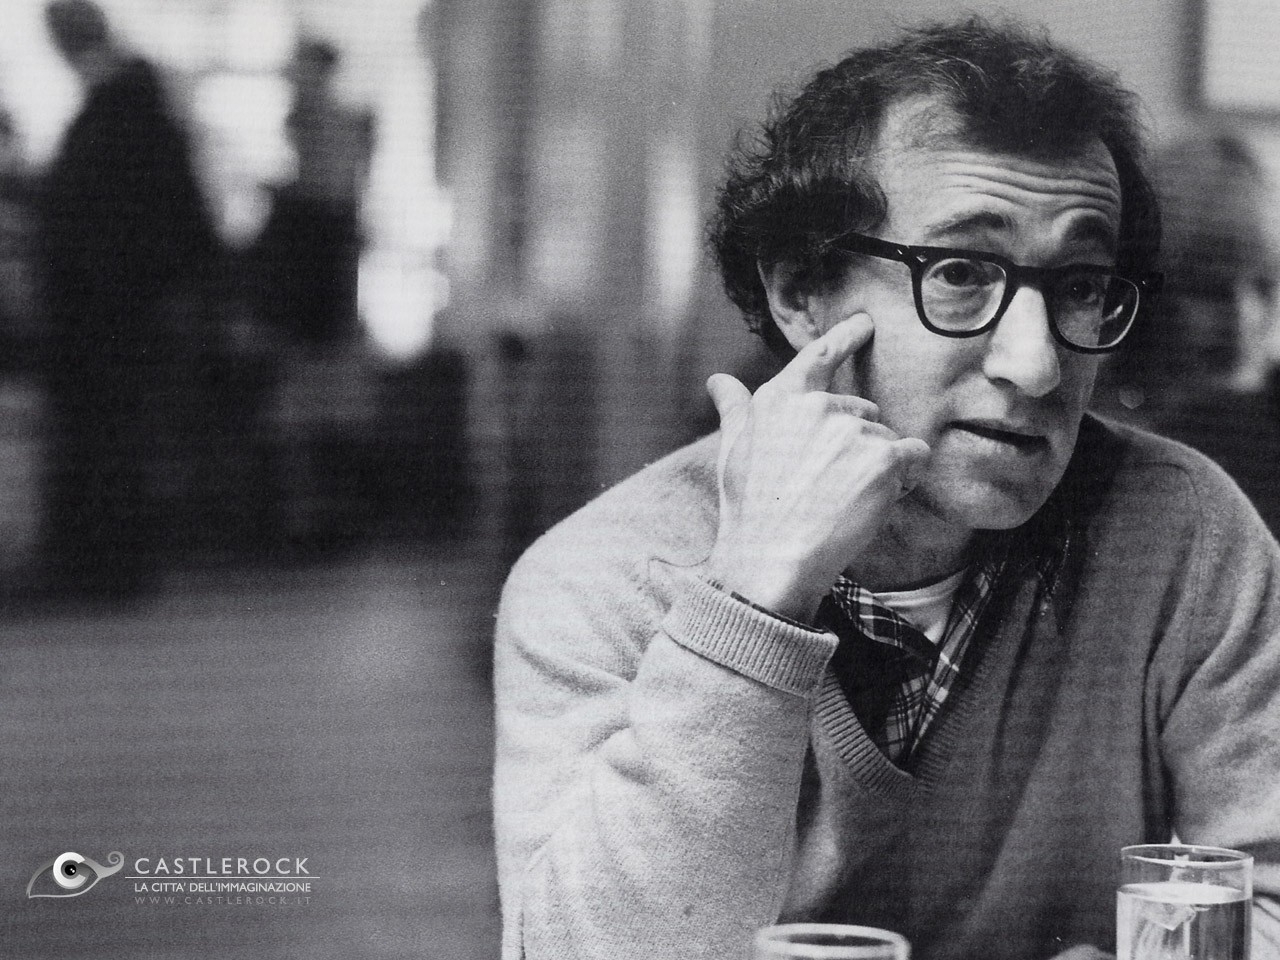 Meetin' WA: Jean-Luc Godard Meets Woody Allen in 26 Minute Film | Open Culture